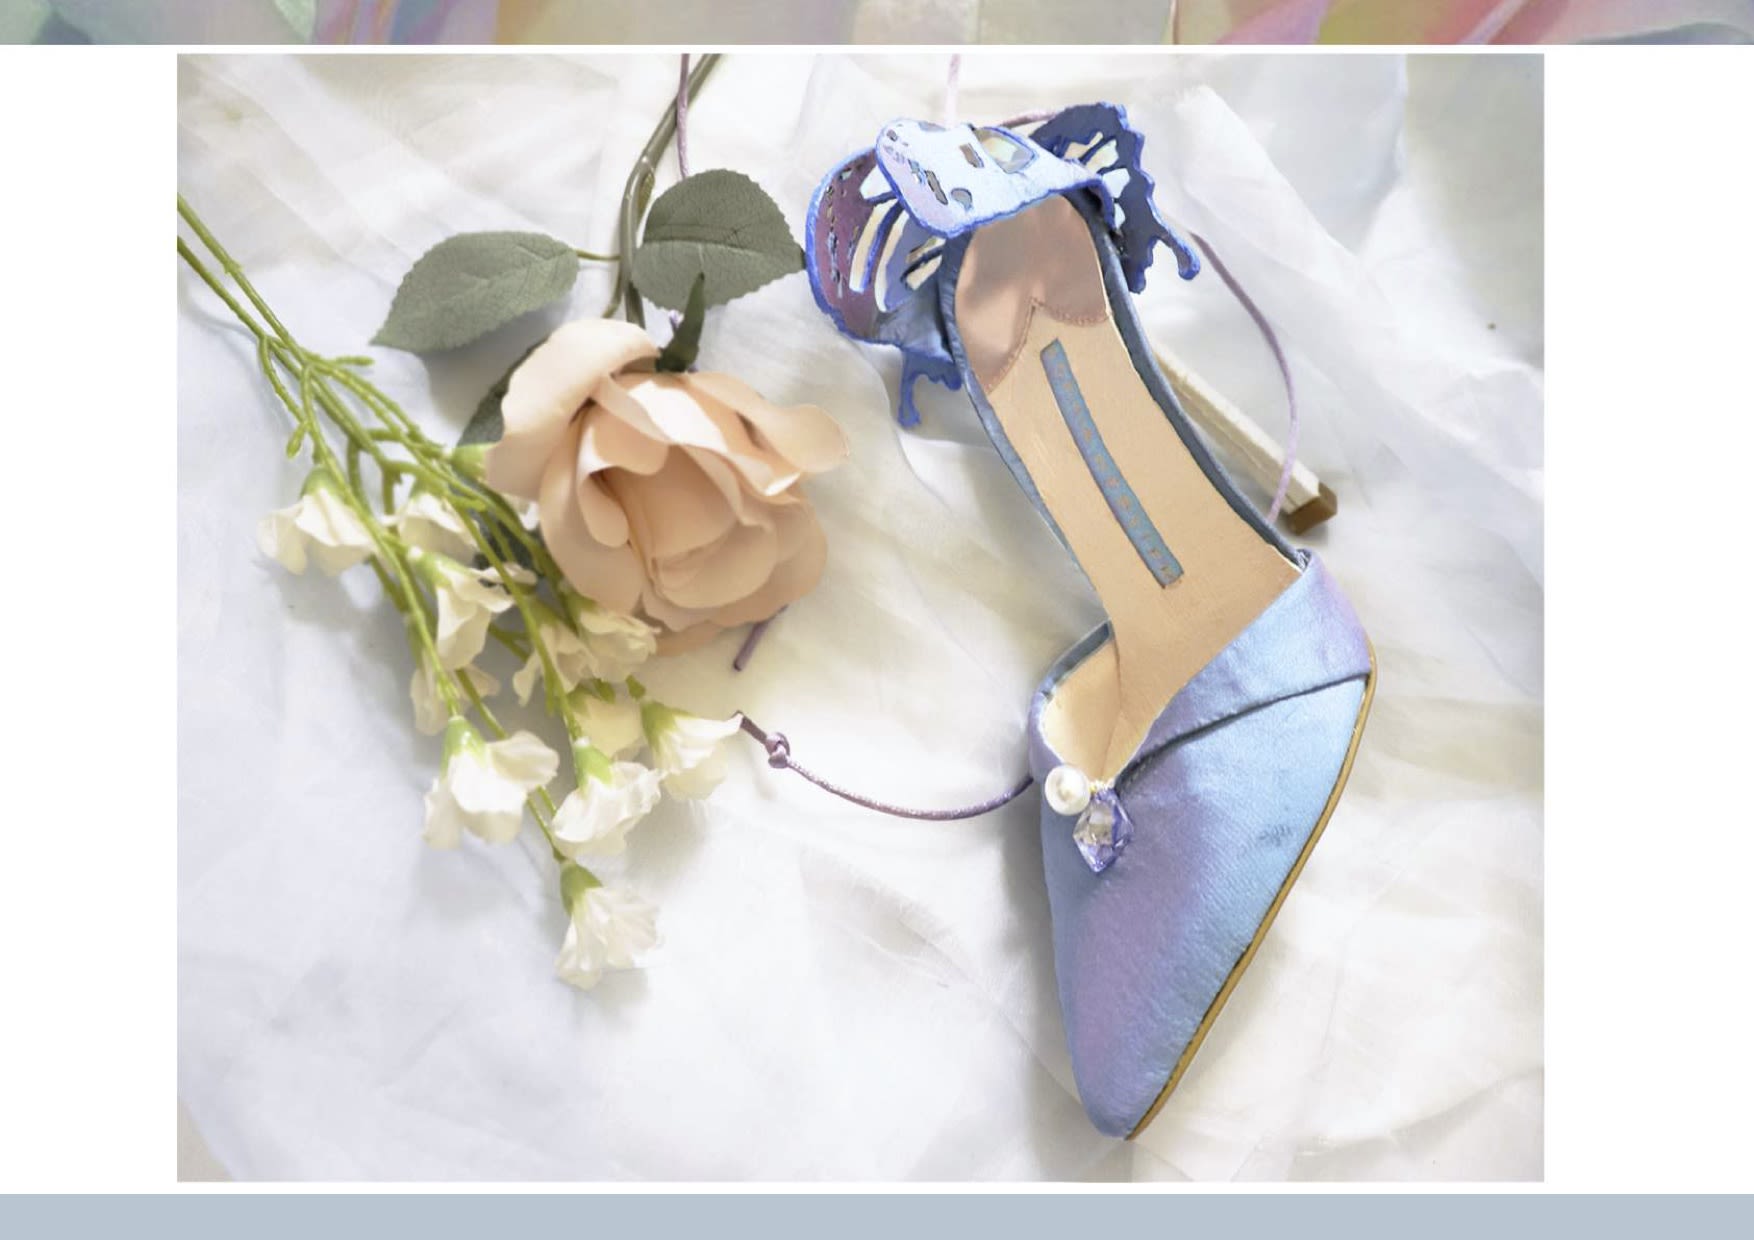 Iridescent blue heeled shoe lying flat on a cream sheet